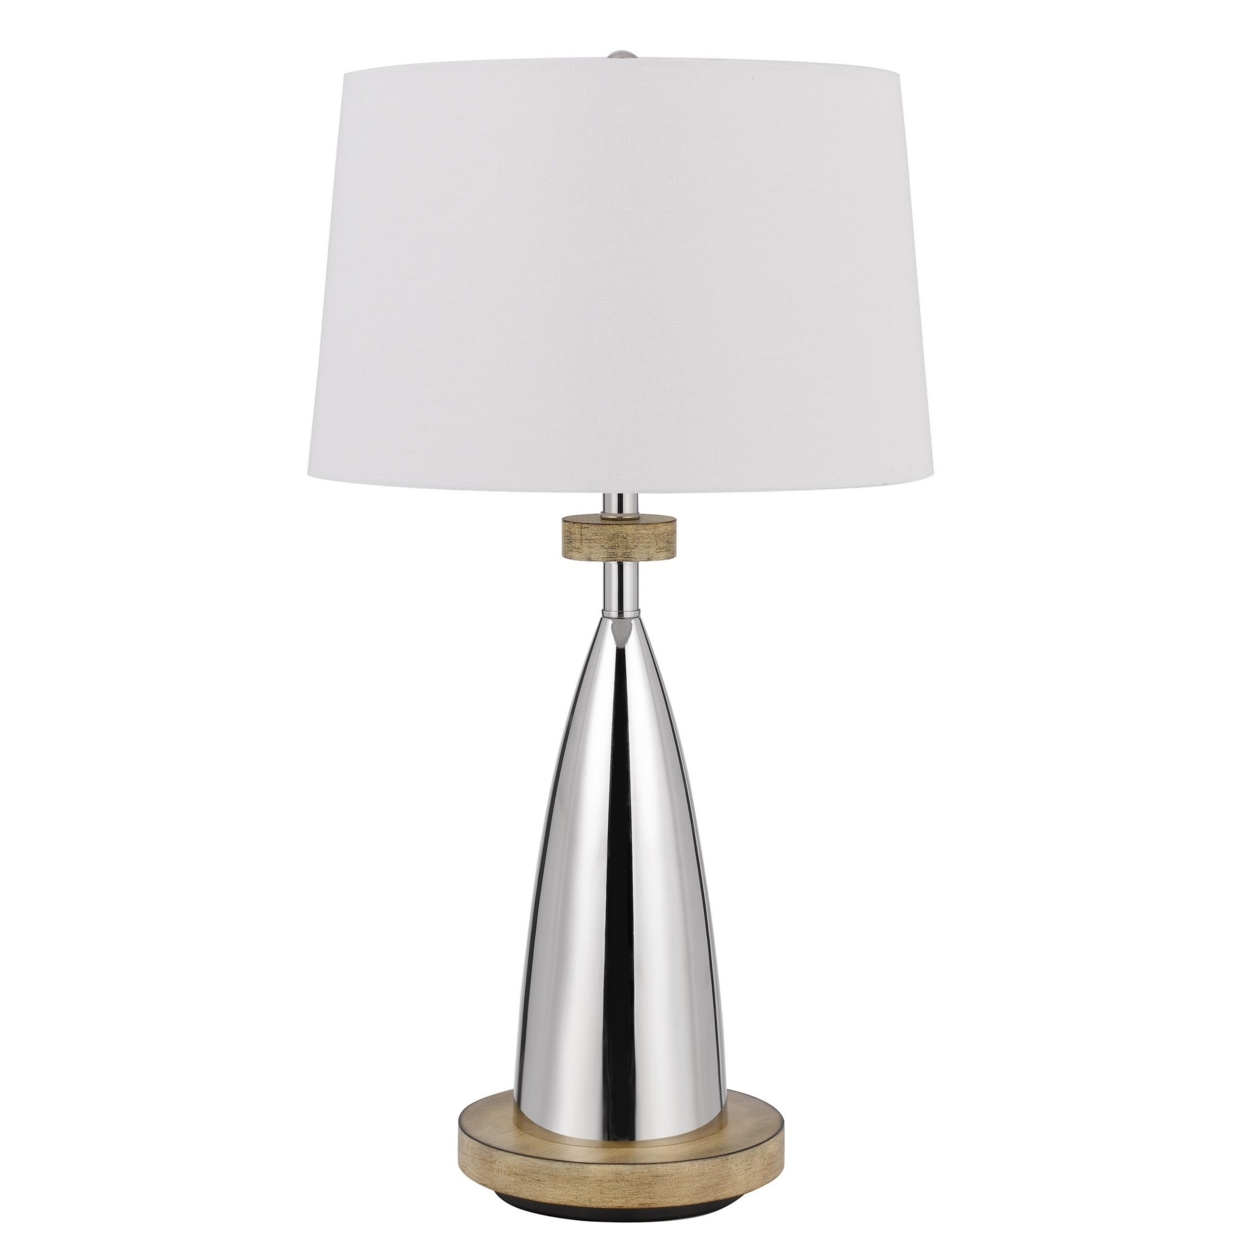 Charlie 31 Inch Modern Table Lamp, Drum Shade, Glossy Chrome, White, Brown- Saltoro Sherpi